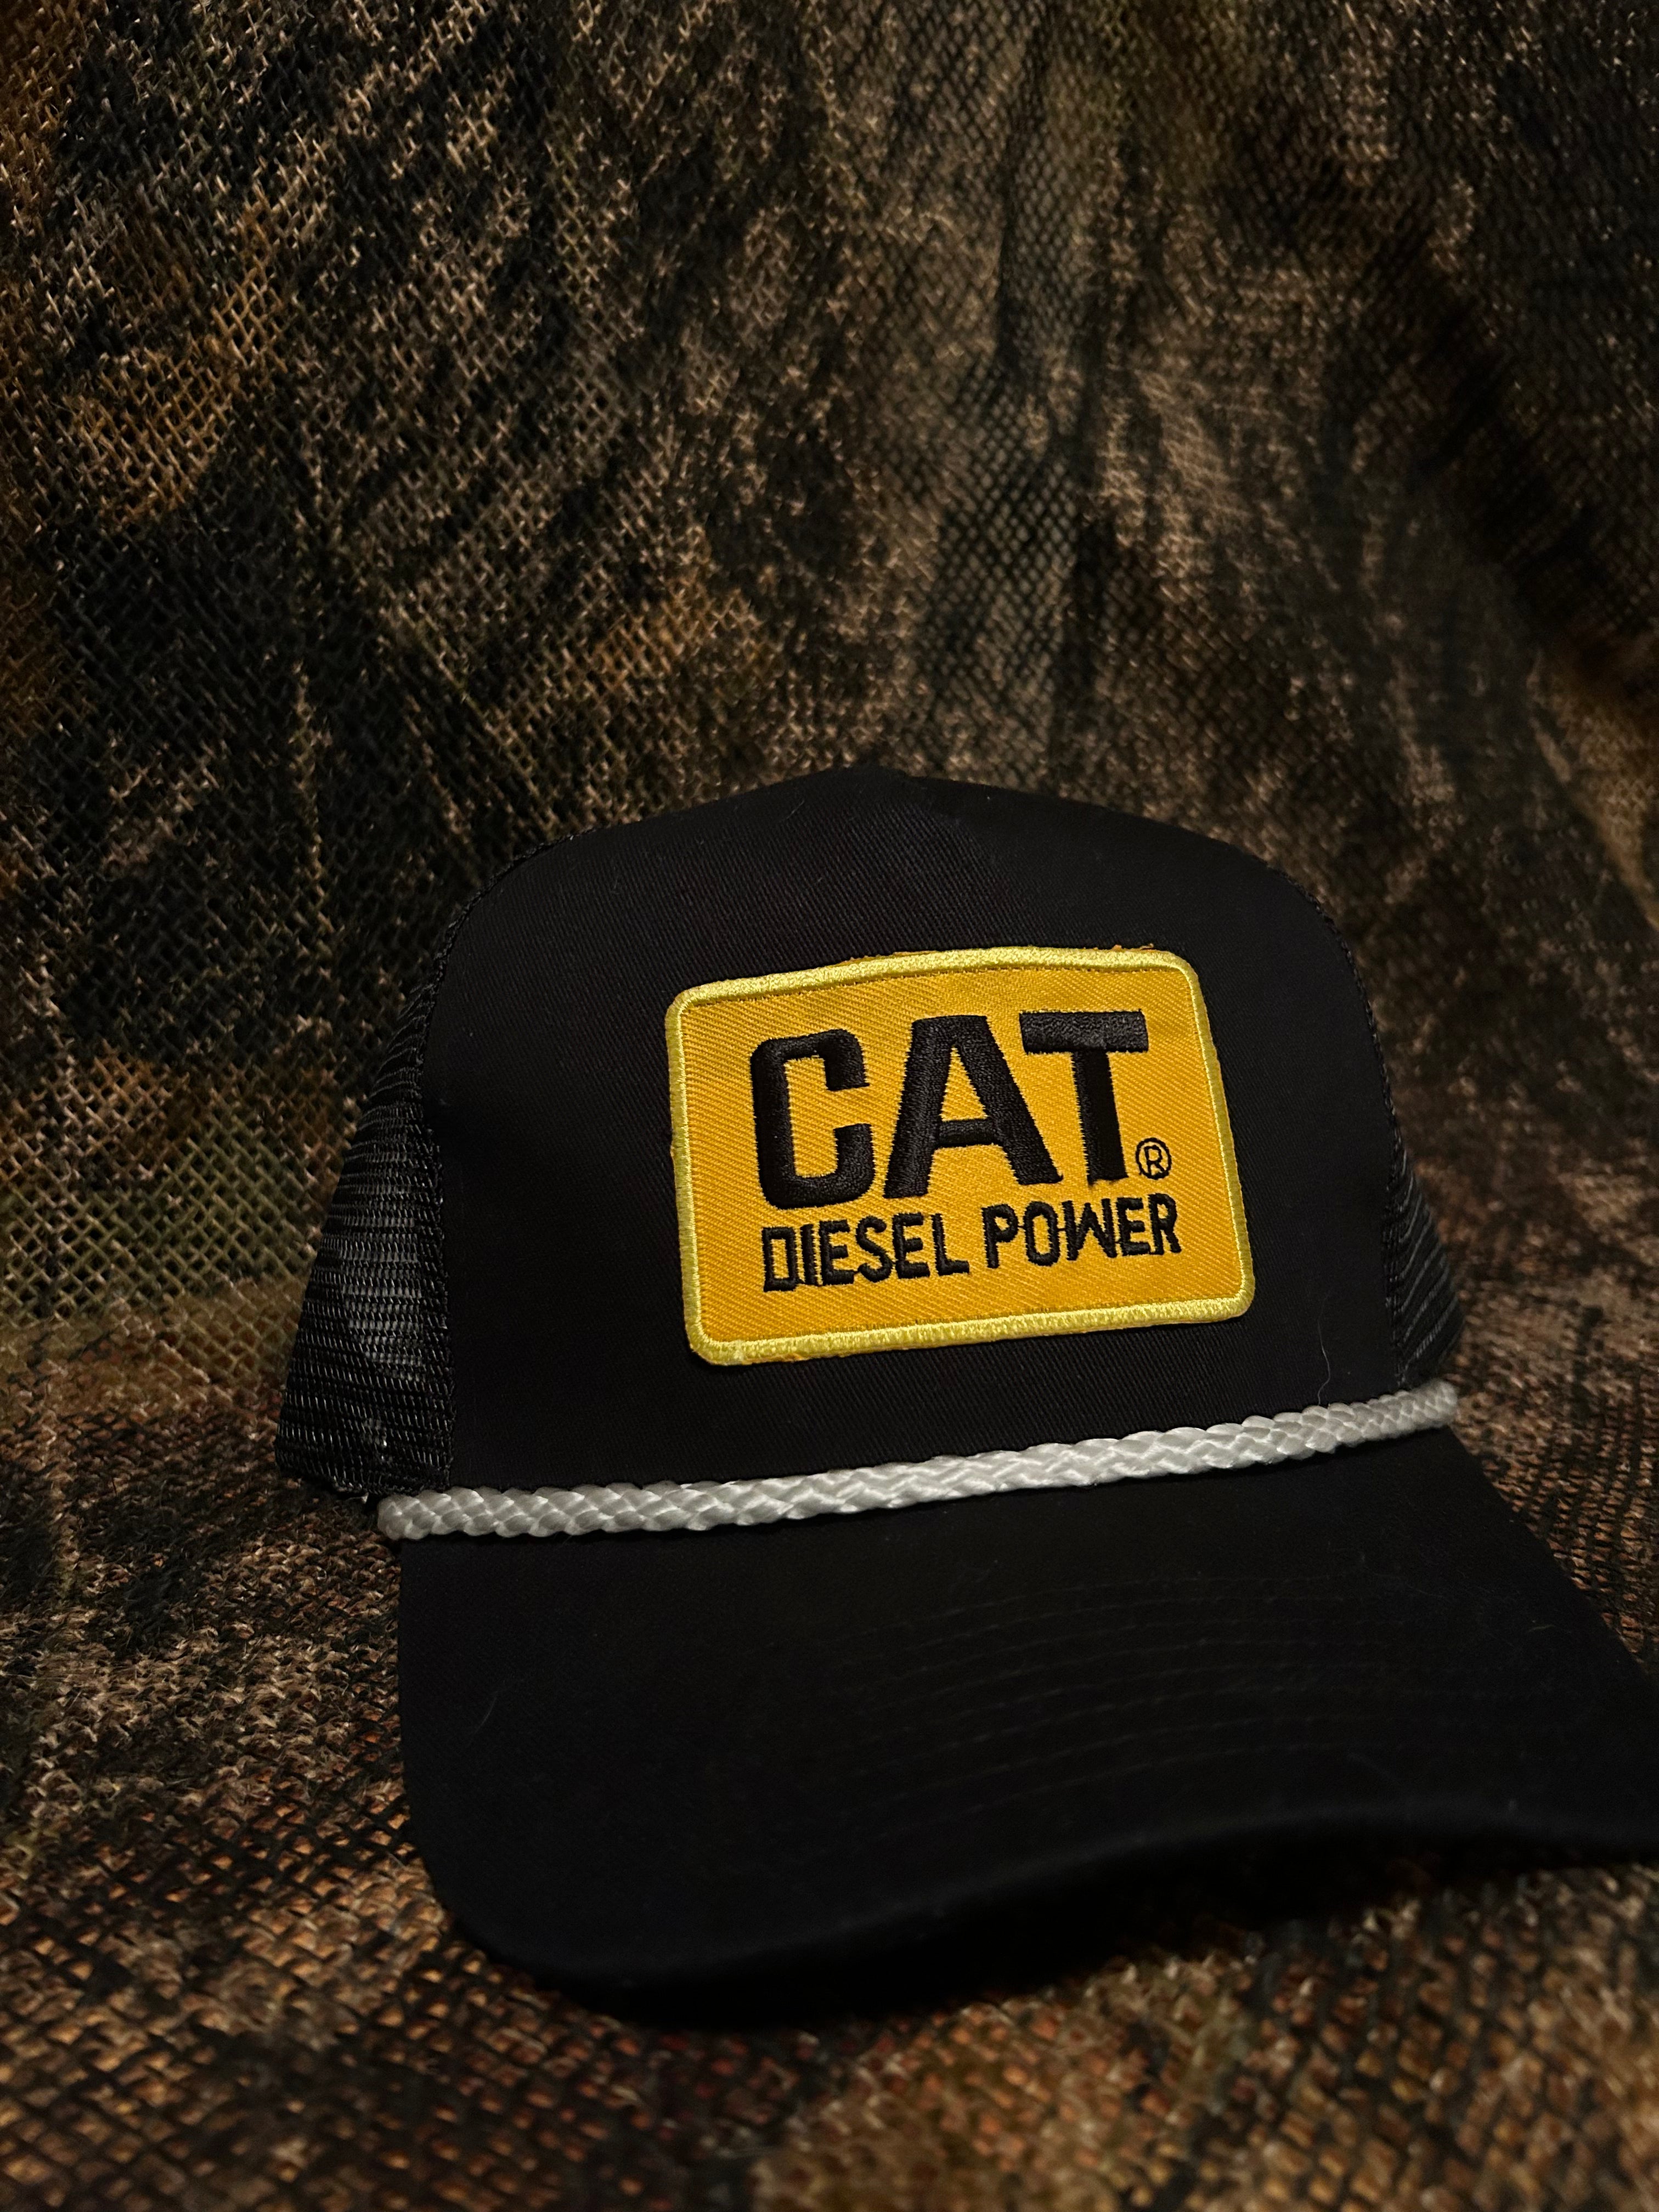 Diesel Power FLEXFIT Trucker Hat